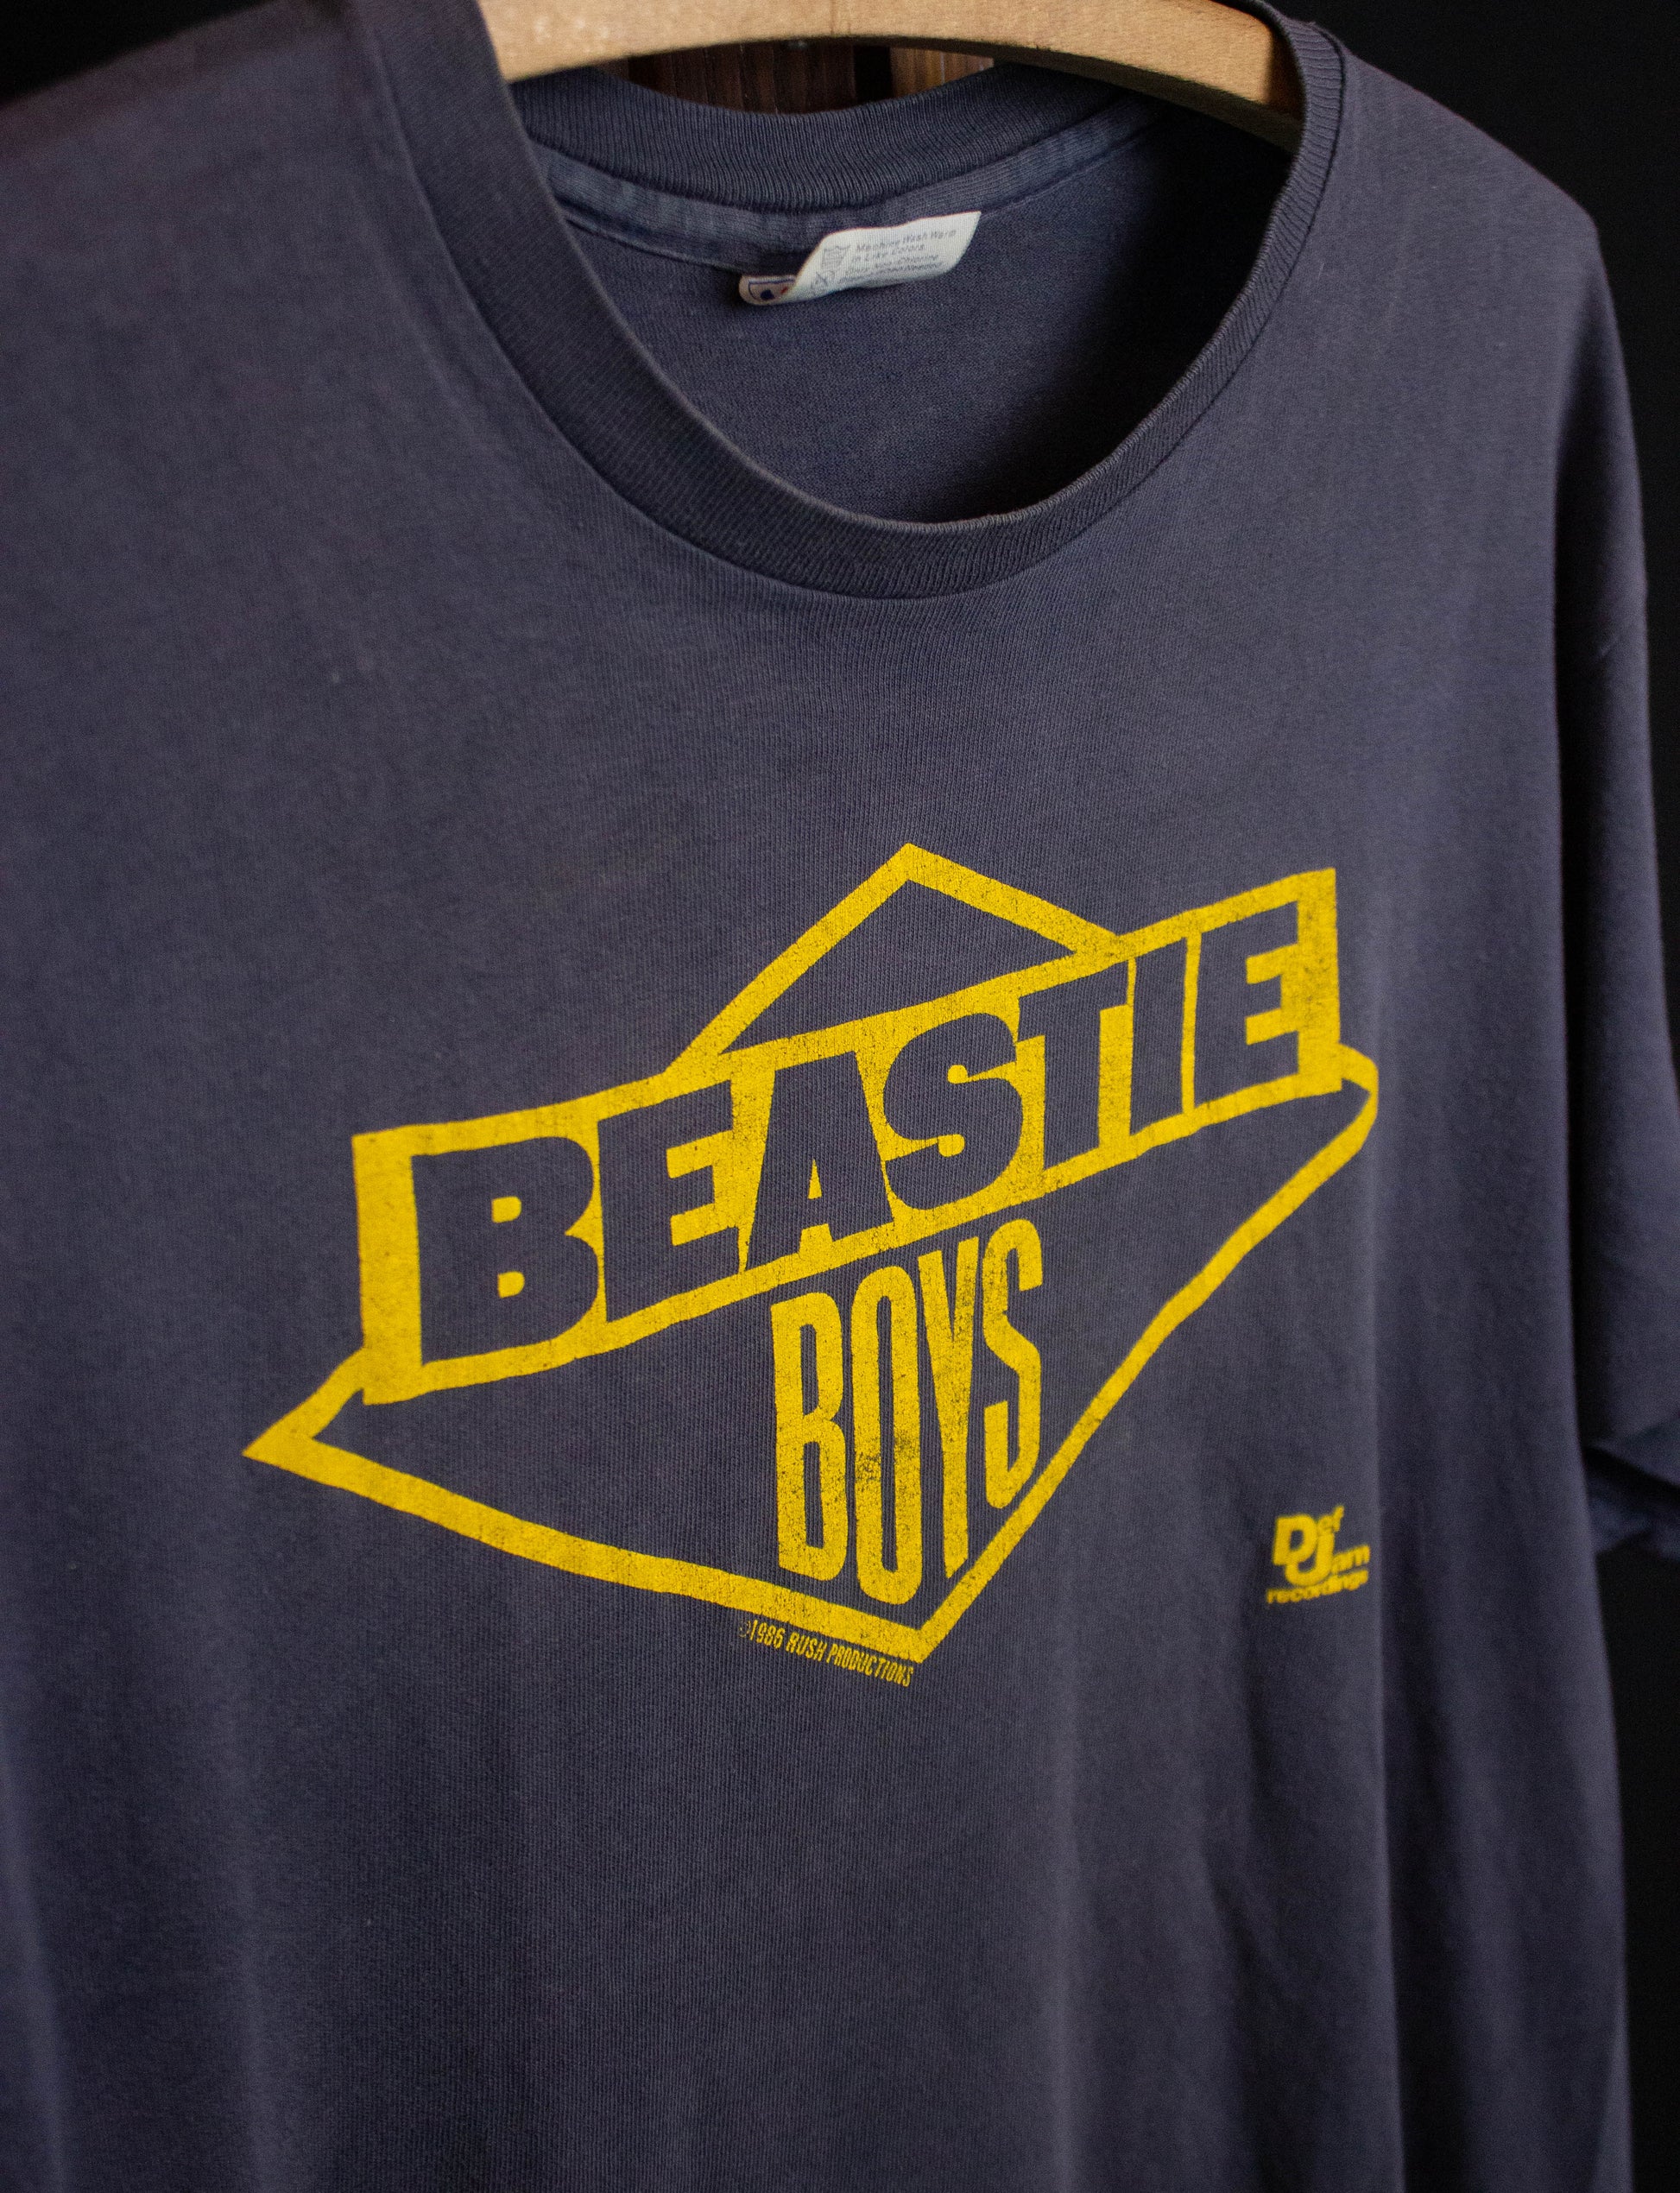 Vintage 1986 Beastie Boys "Get Off My Dick" Concert T Shirt Large